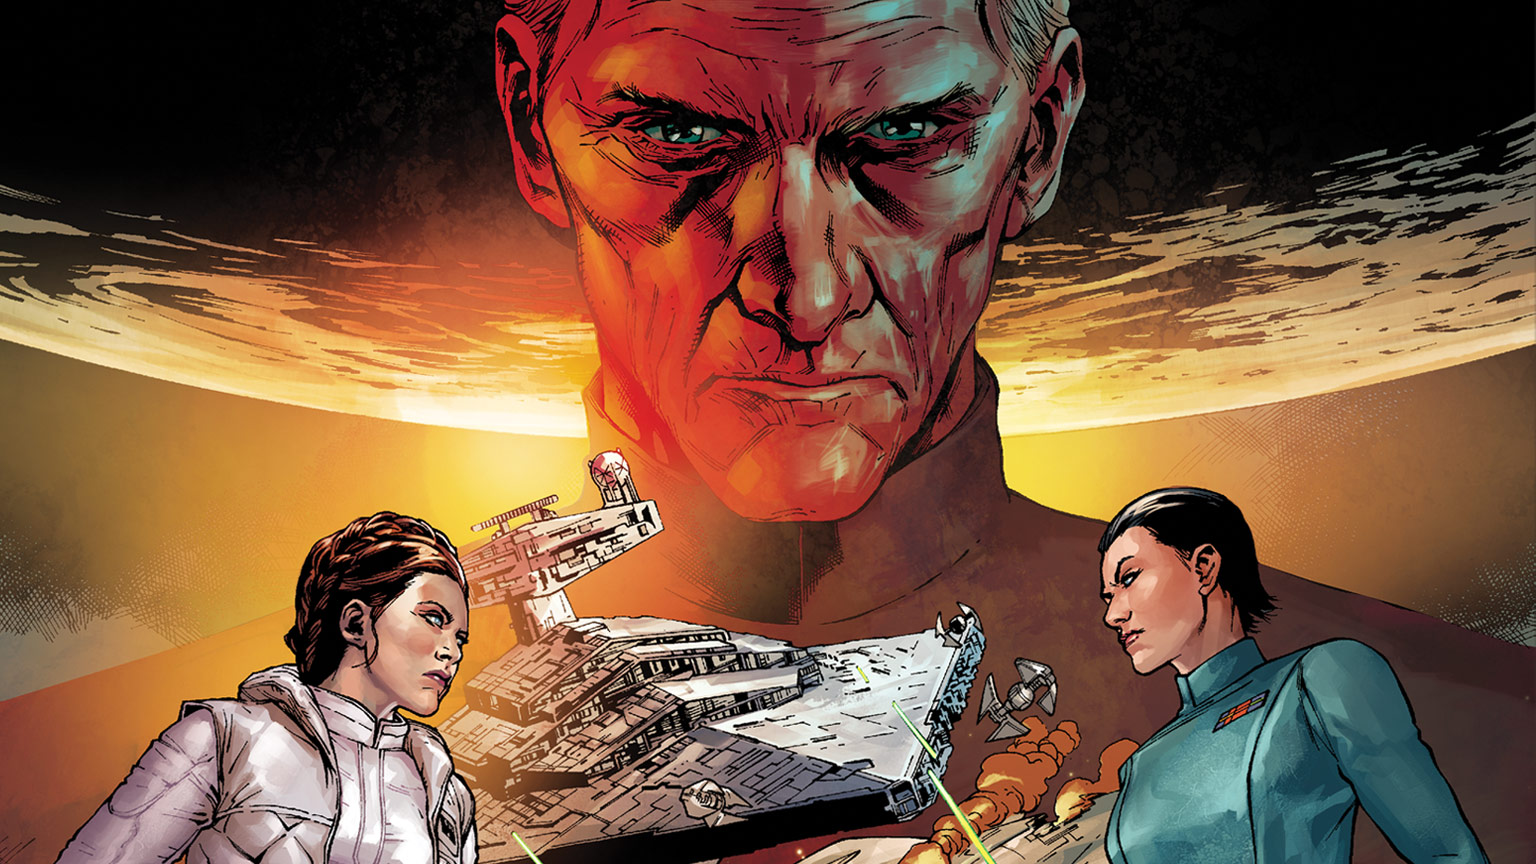 Tarkin Readies to Strike in Marvel’s Star Wars #7 – Exclusive Preview